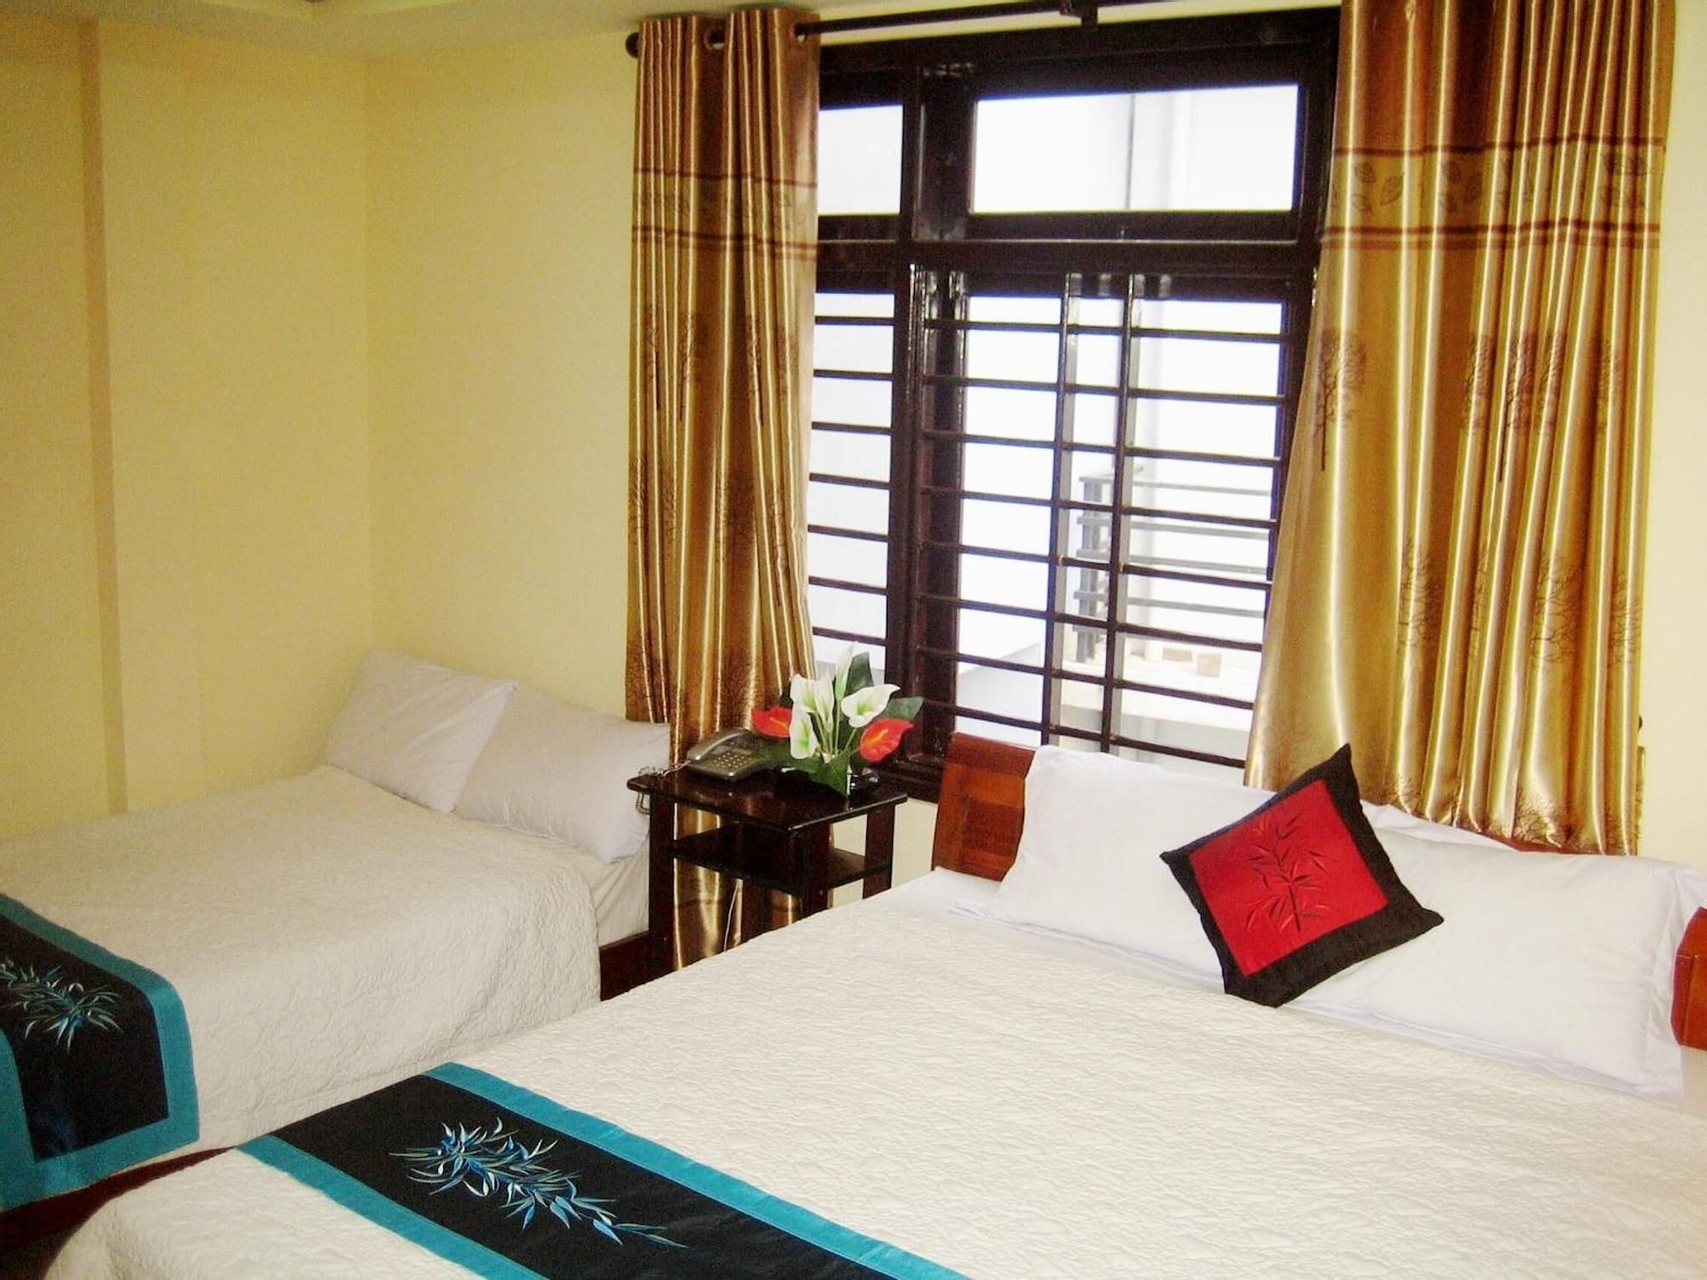 Bedroom 3, Champa Hotel, Huế